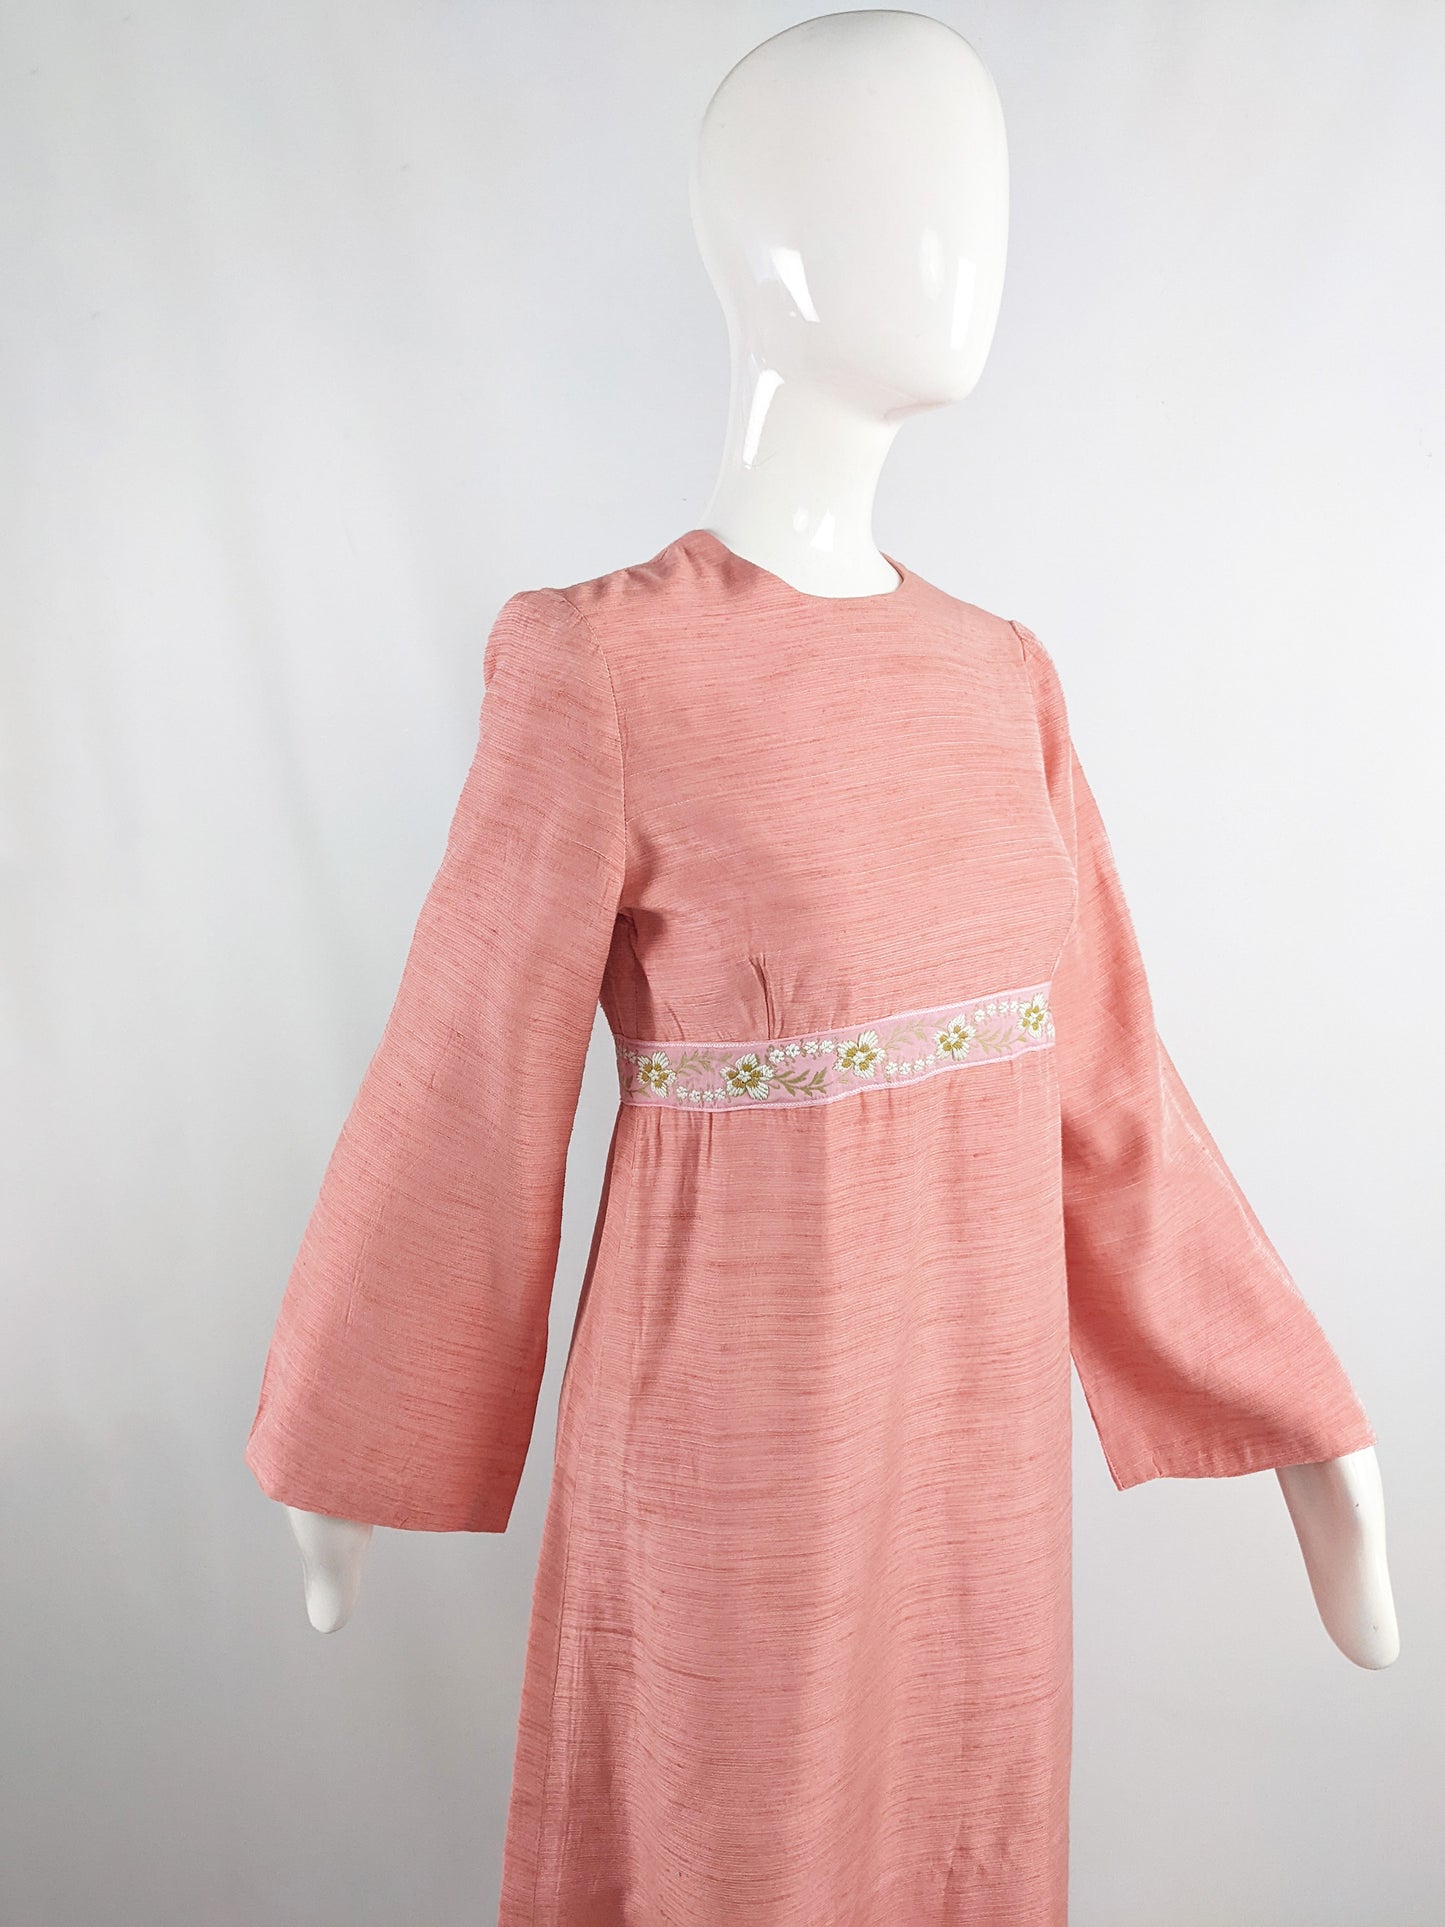 Vintage 1960s Raw Silk Peach Maxi Dress